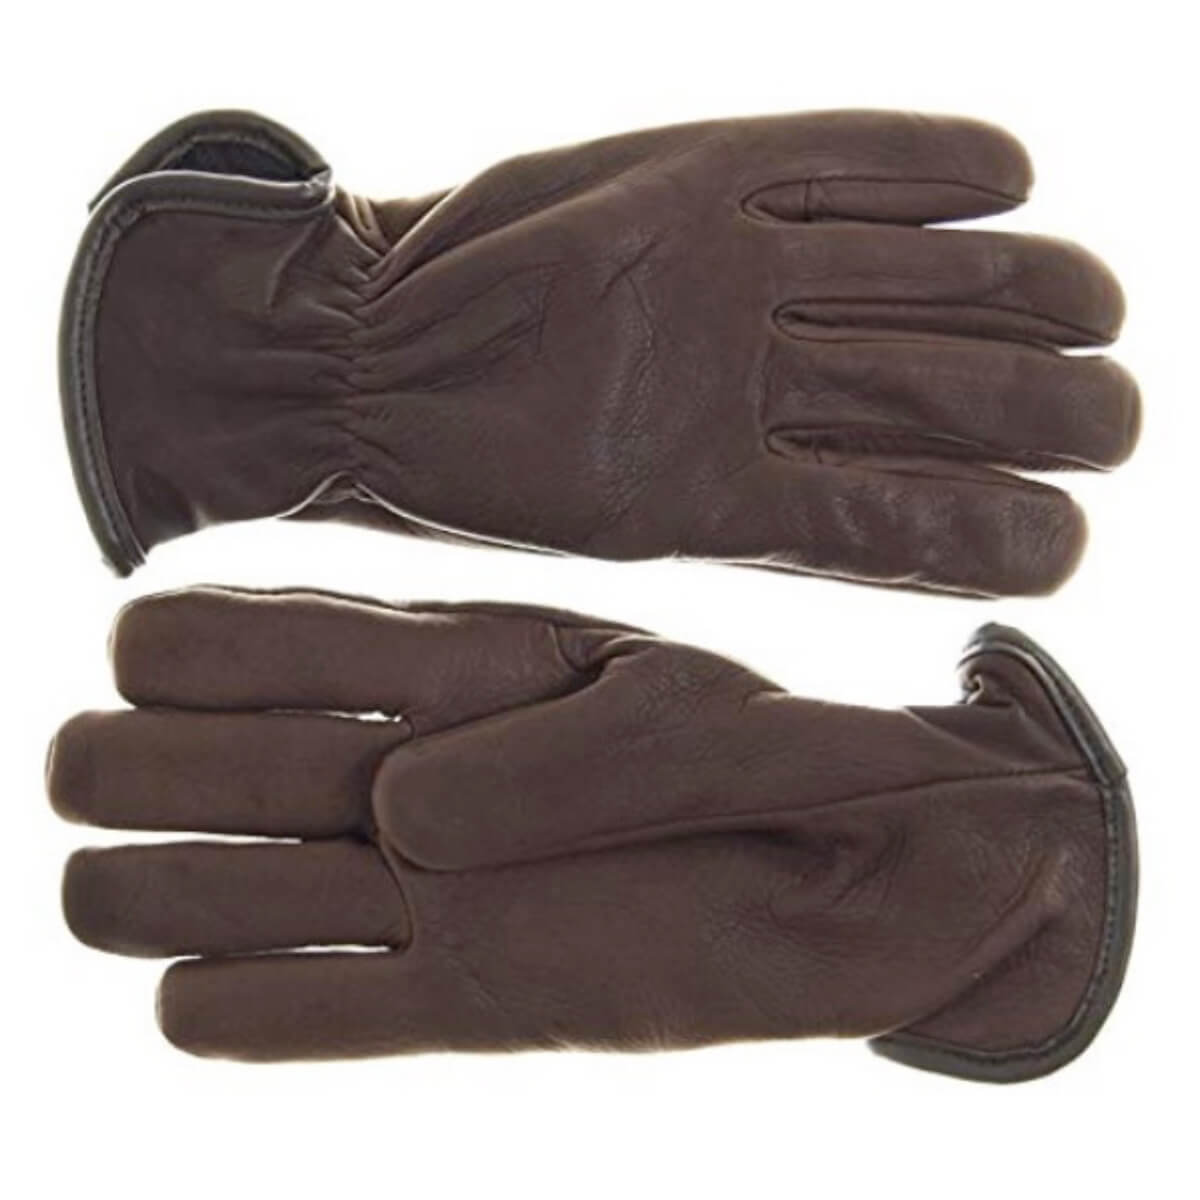 Geier buckskin gloves with merino wool lining